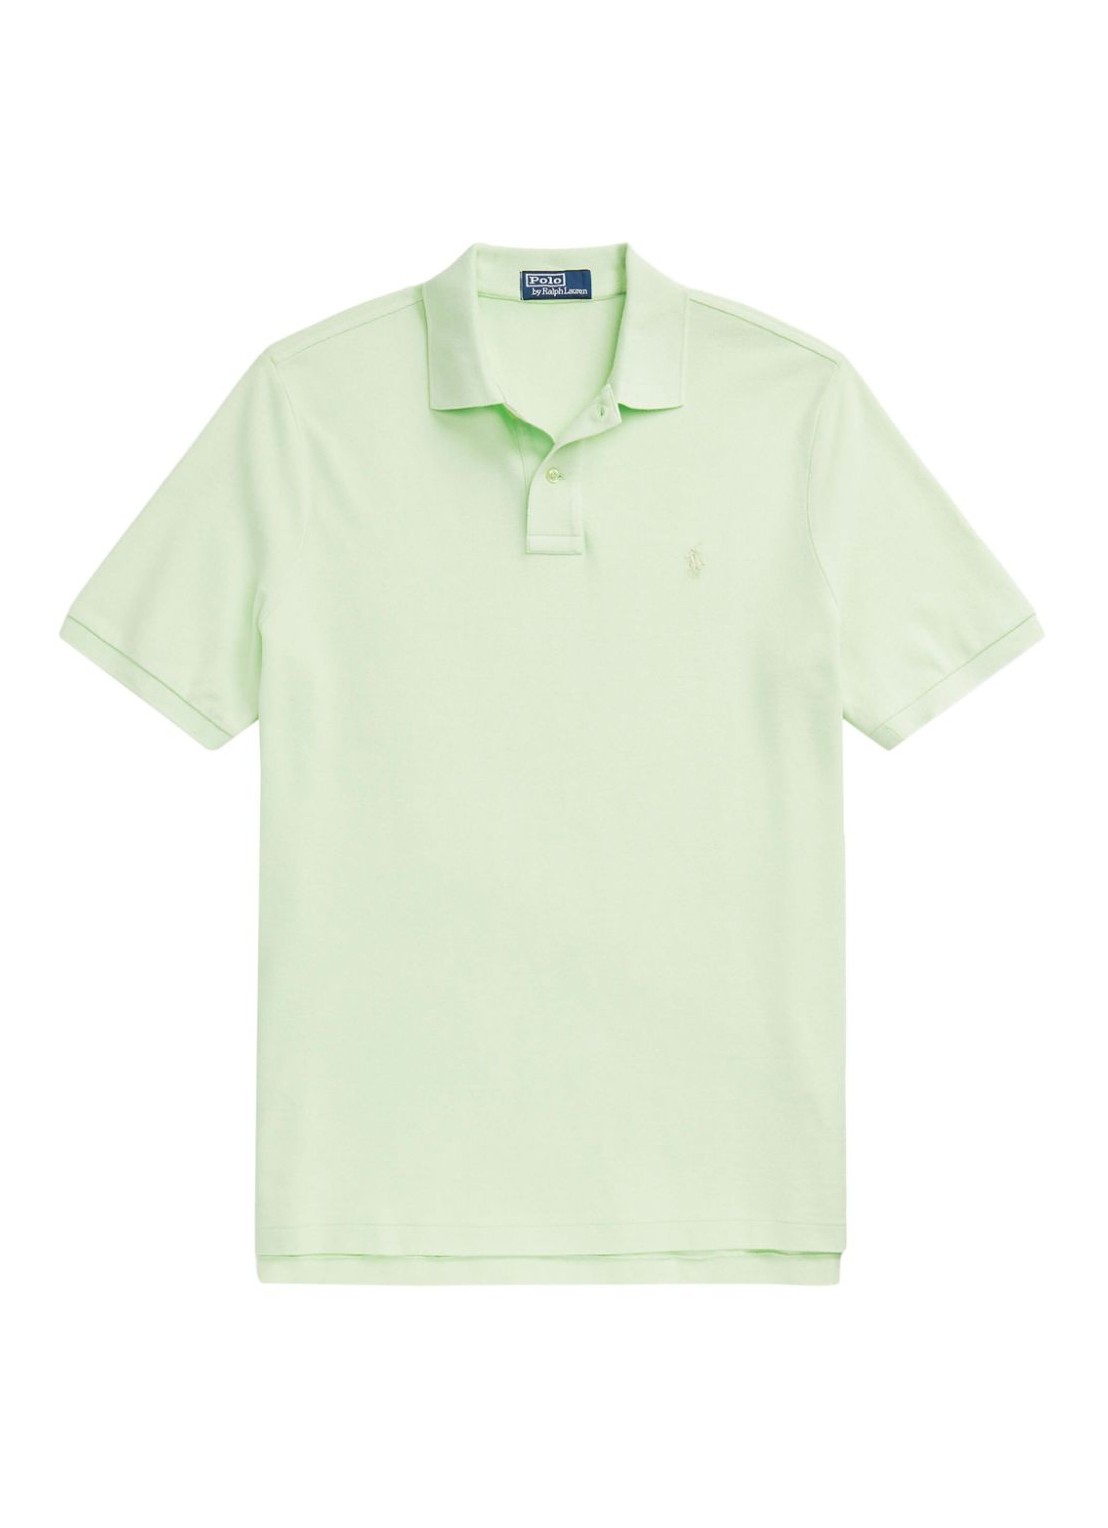 Polo polo ralph lauren polo man sskcclsm1-short sleeve-polo shirt 710910898003 leaf talla XXL
 